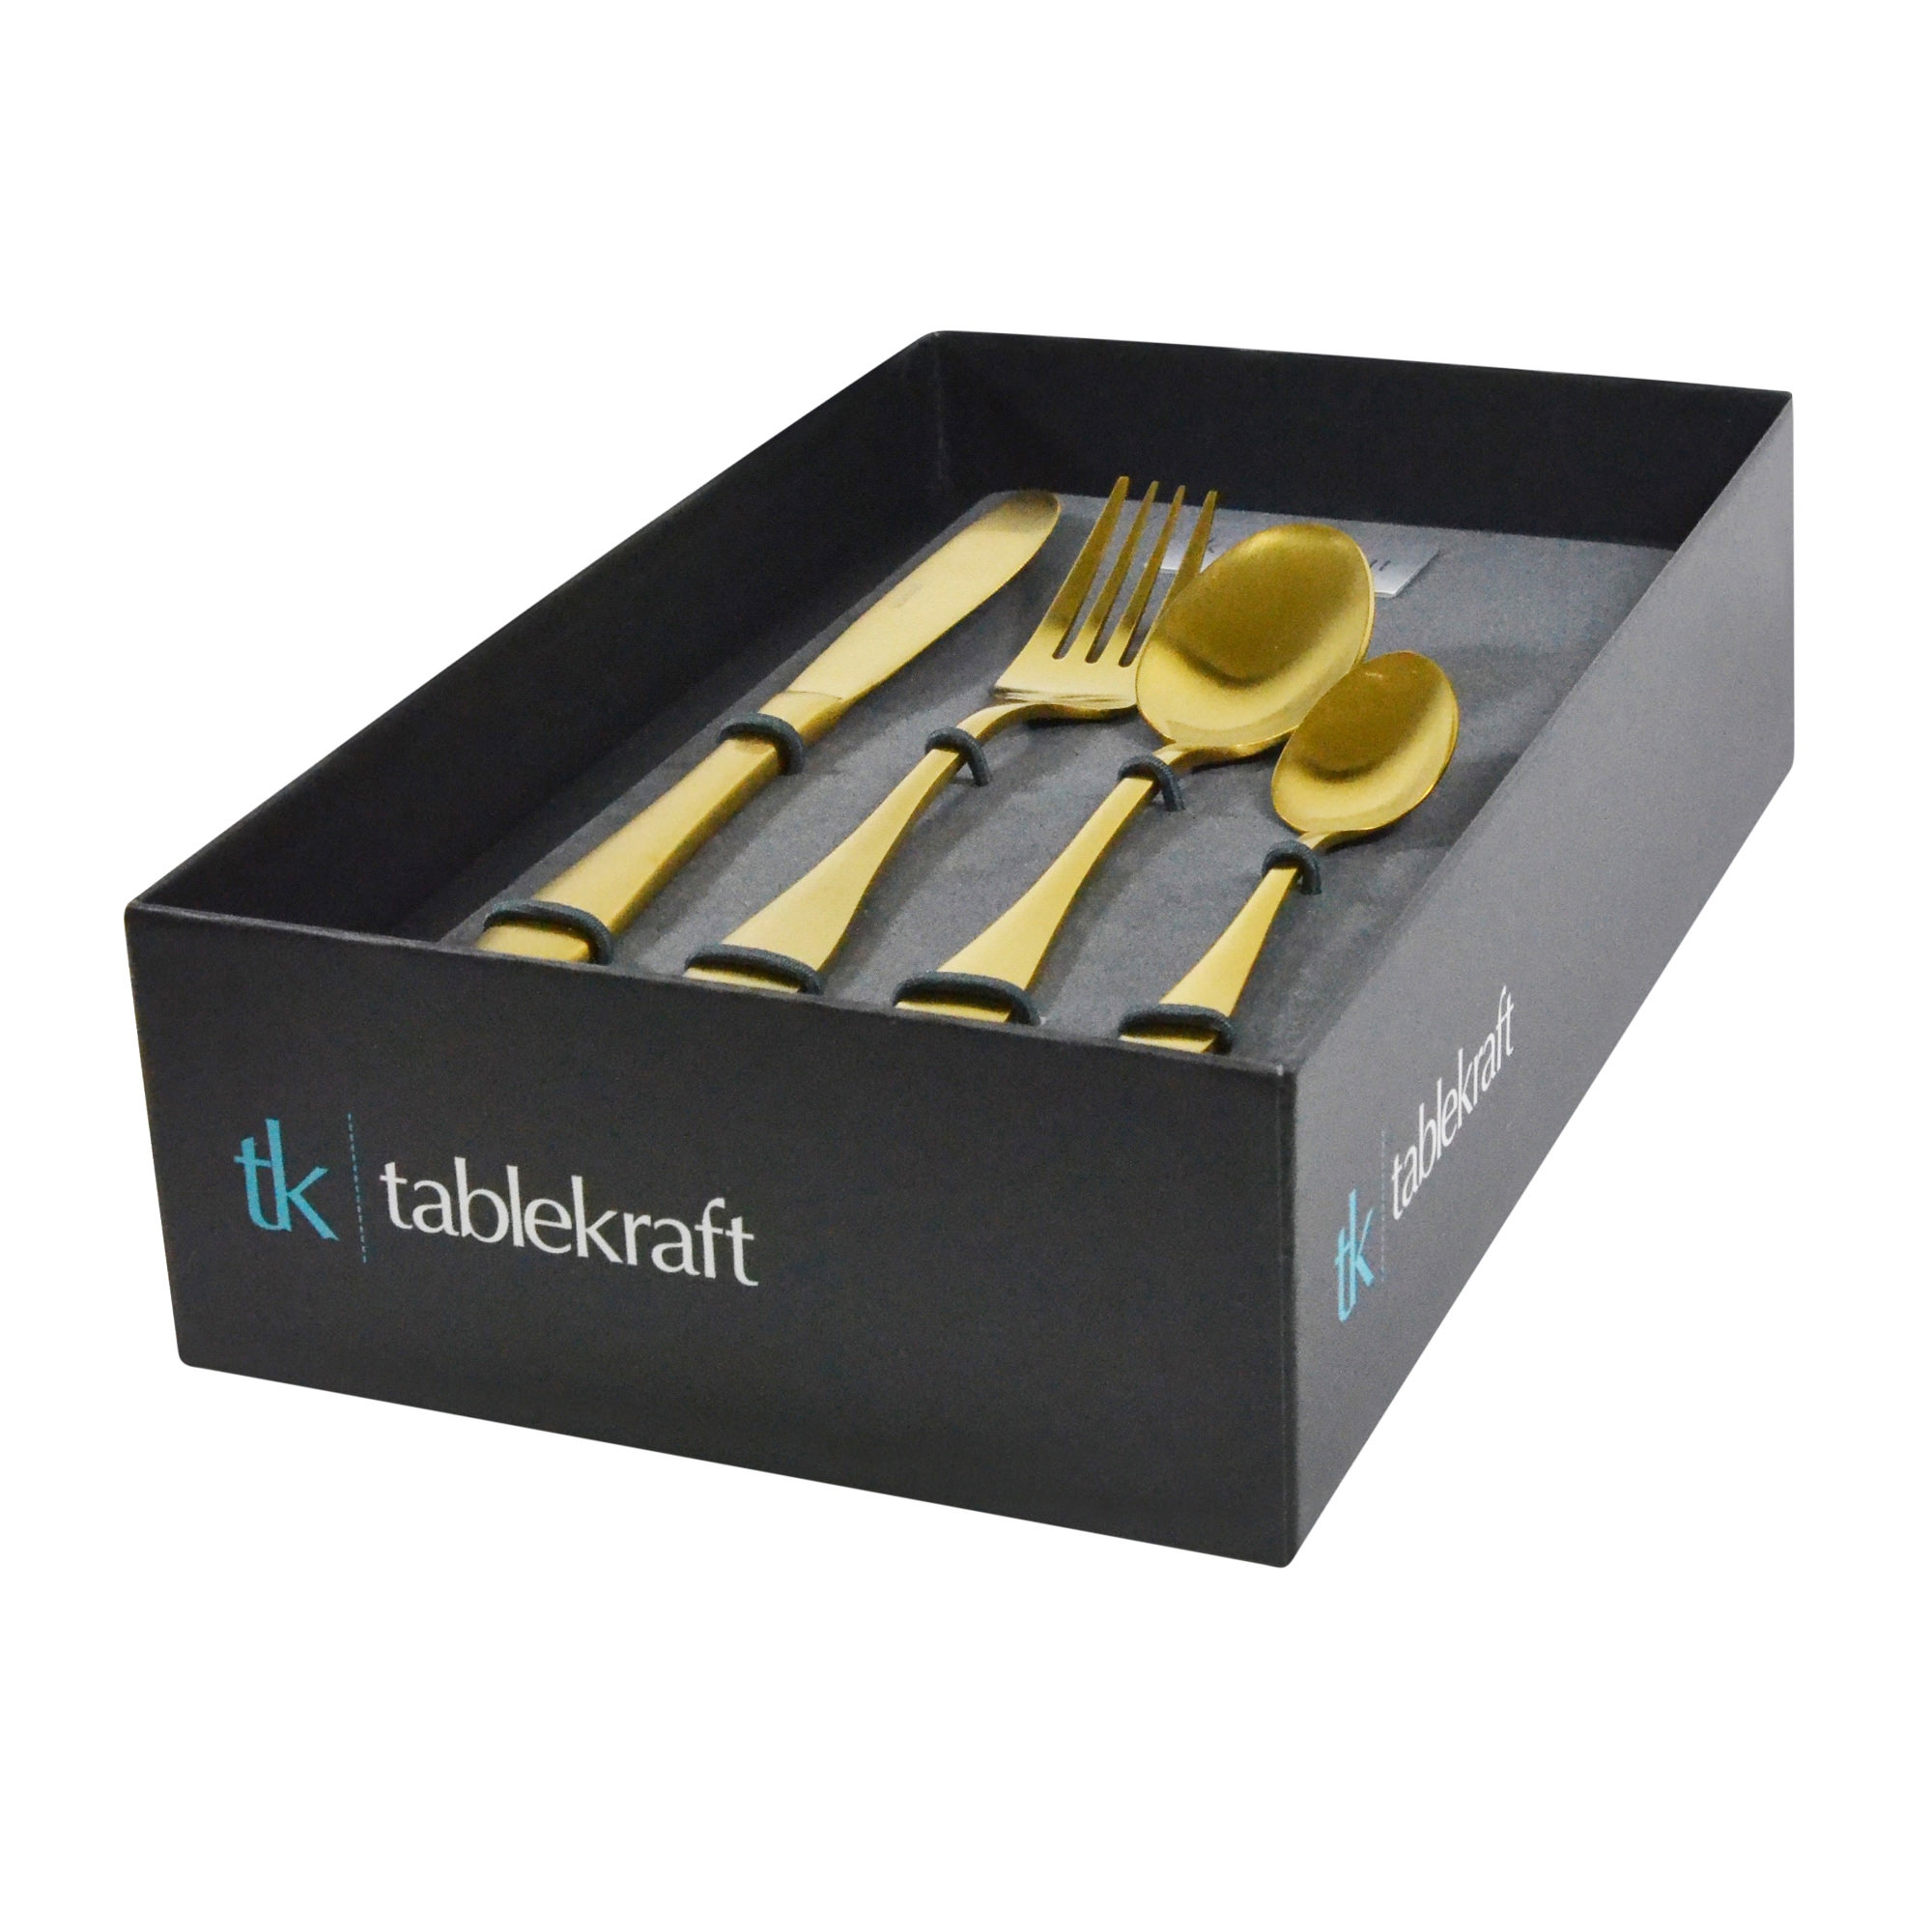 Tablekraft Soho Cutlery Set 16pc Gold Image 2